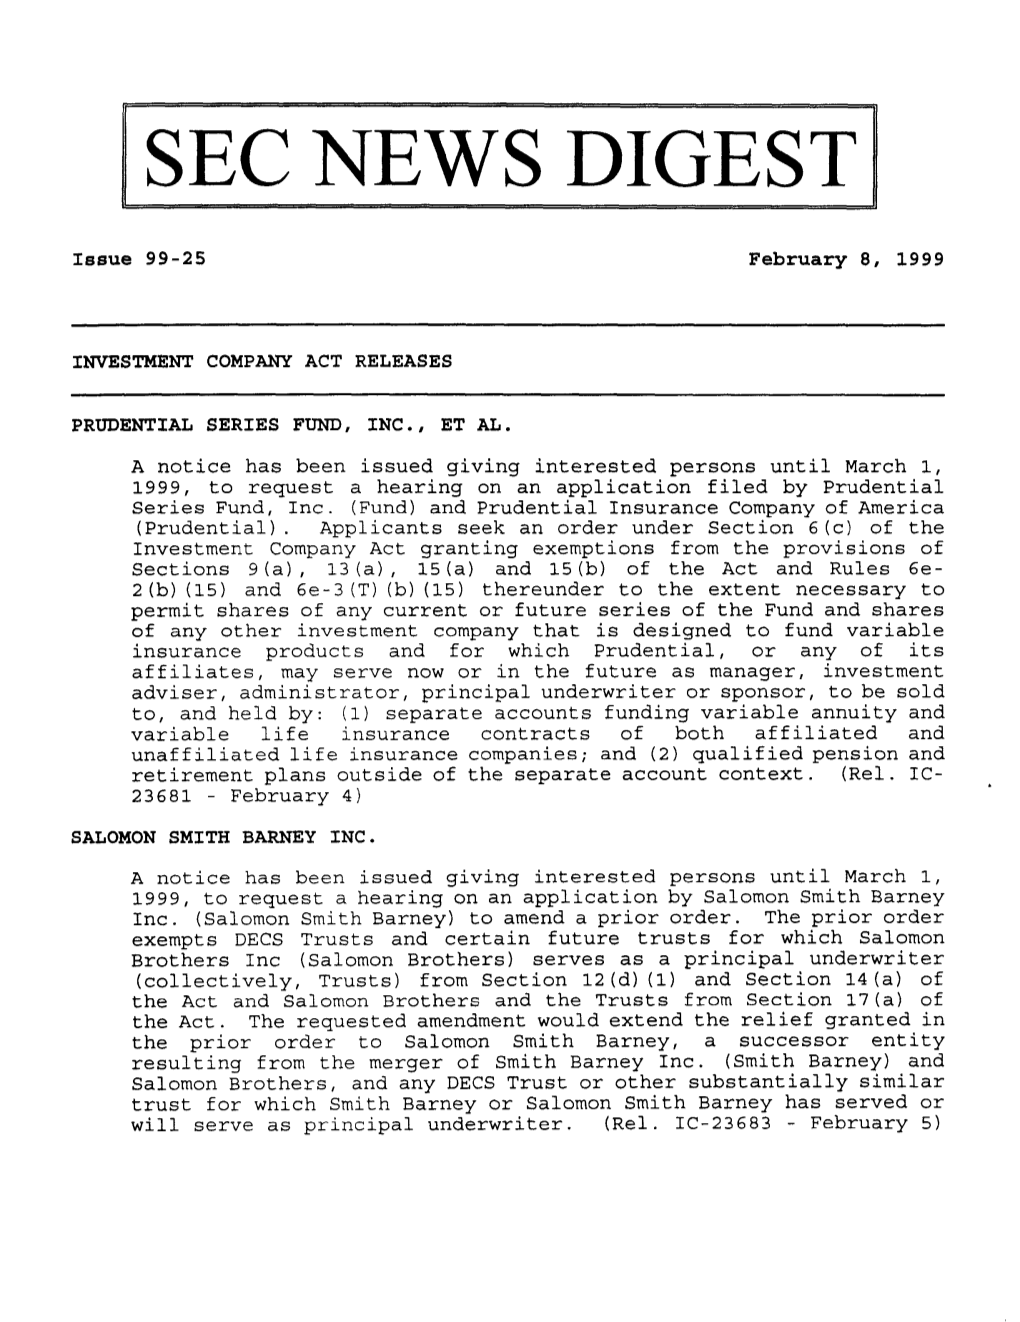 SEC News Digest, 02-08-1999